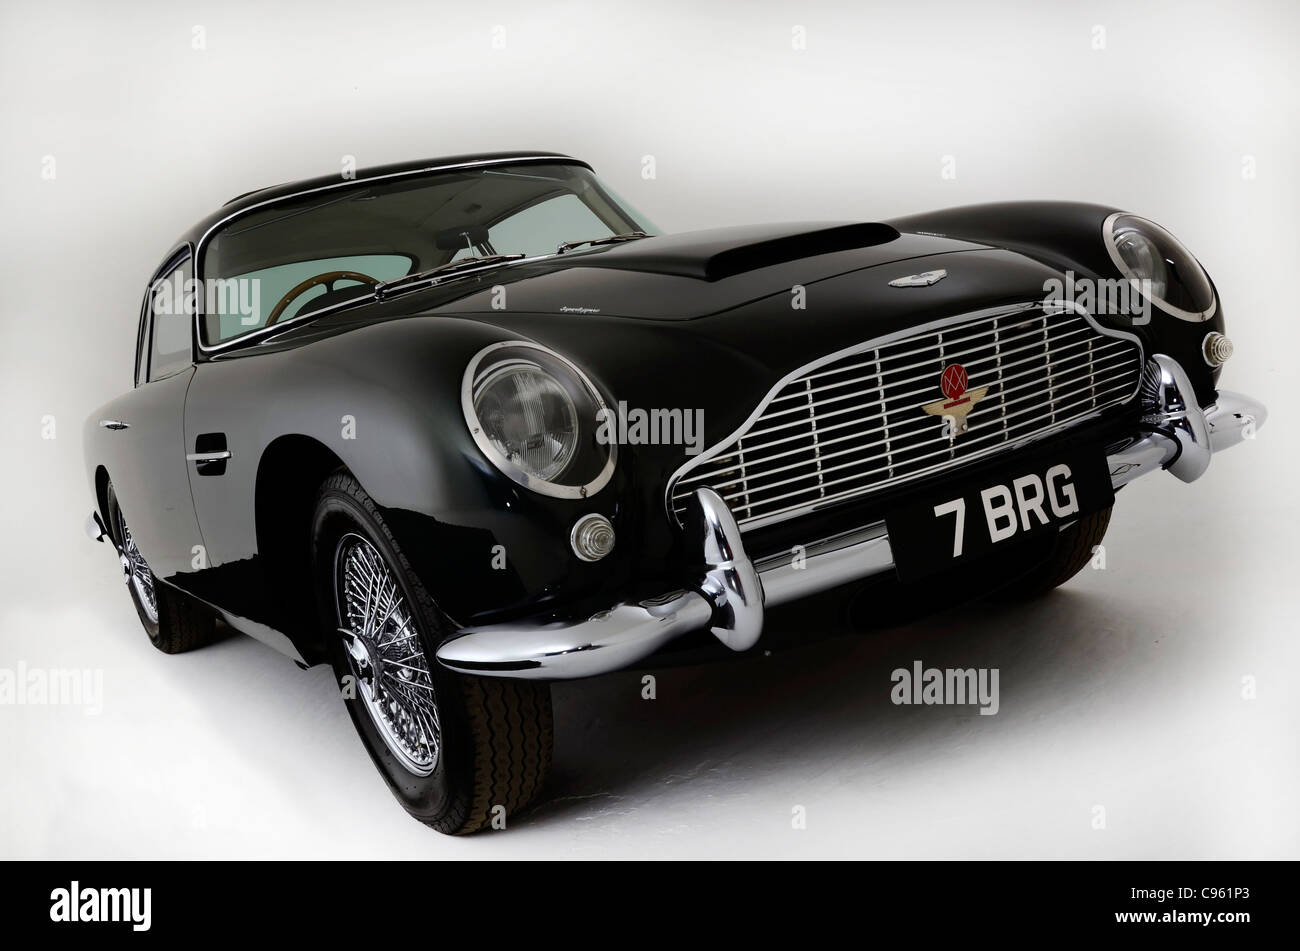 1963 Aston Martin DB4 GT Stock Photo